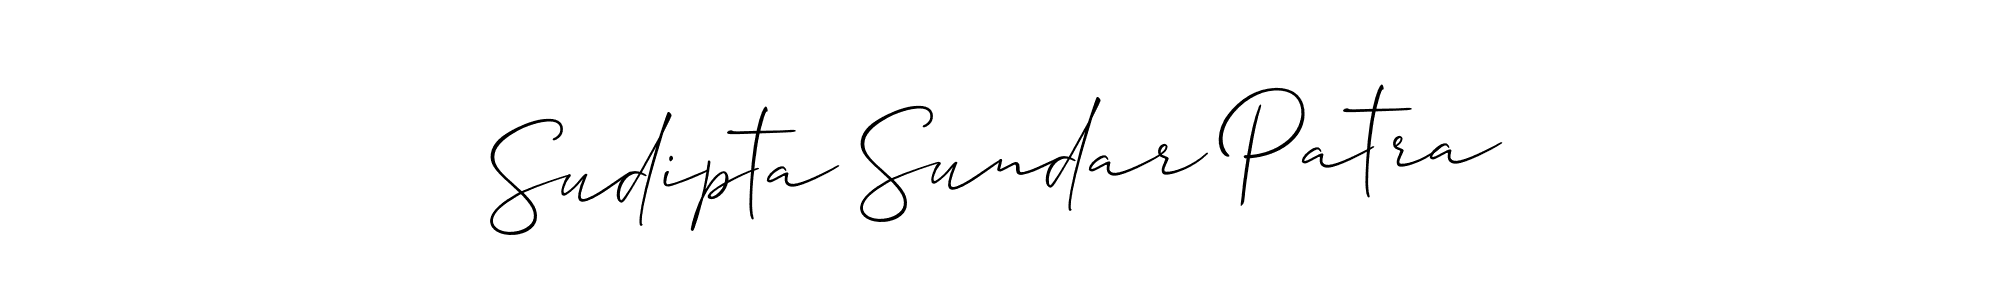 How to Draw Sudipta Sundar Patra signature style? Allison_Script is a latest design signature styles for name Sudipta Sundar Patra. Sudipta Sundar Patra signature style 2 images and pictures png